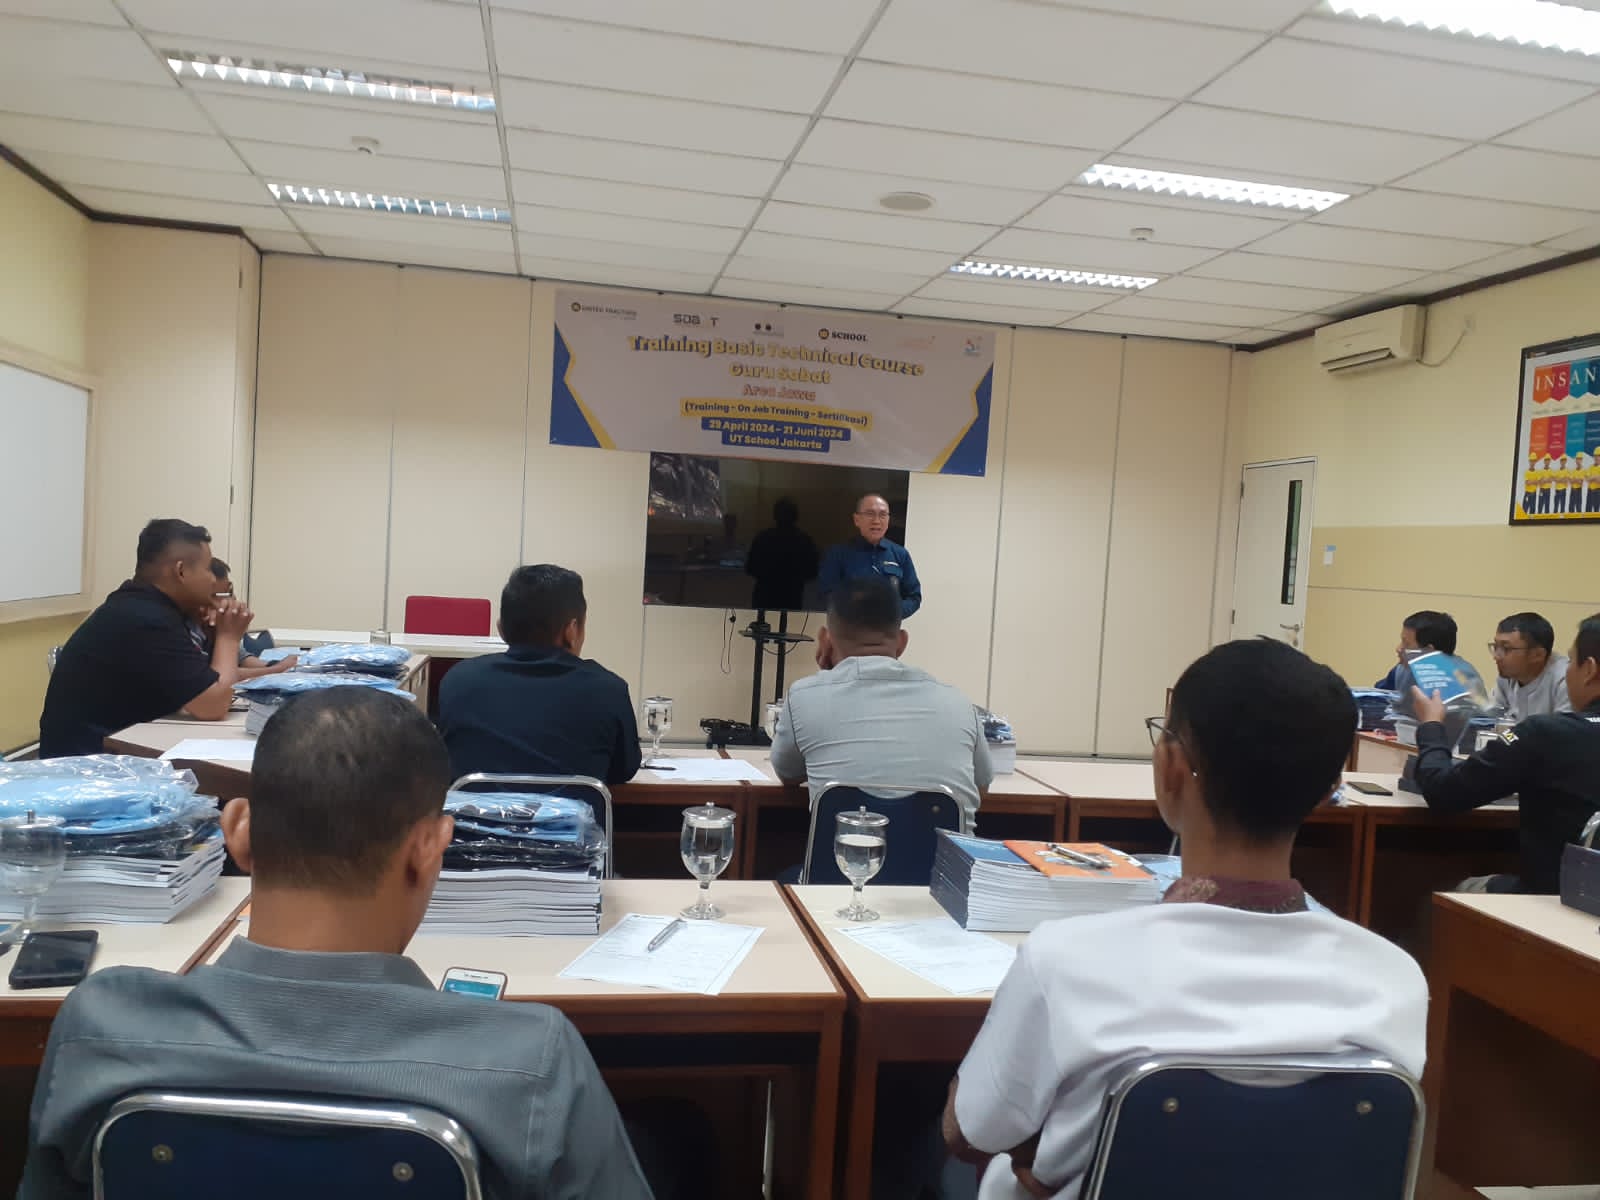 SMK Negeri 2 Batangtoru Teachers Enhanced Skills Through Basic Technical Course Training Content